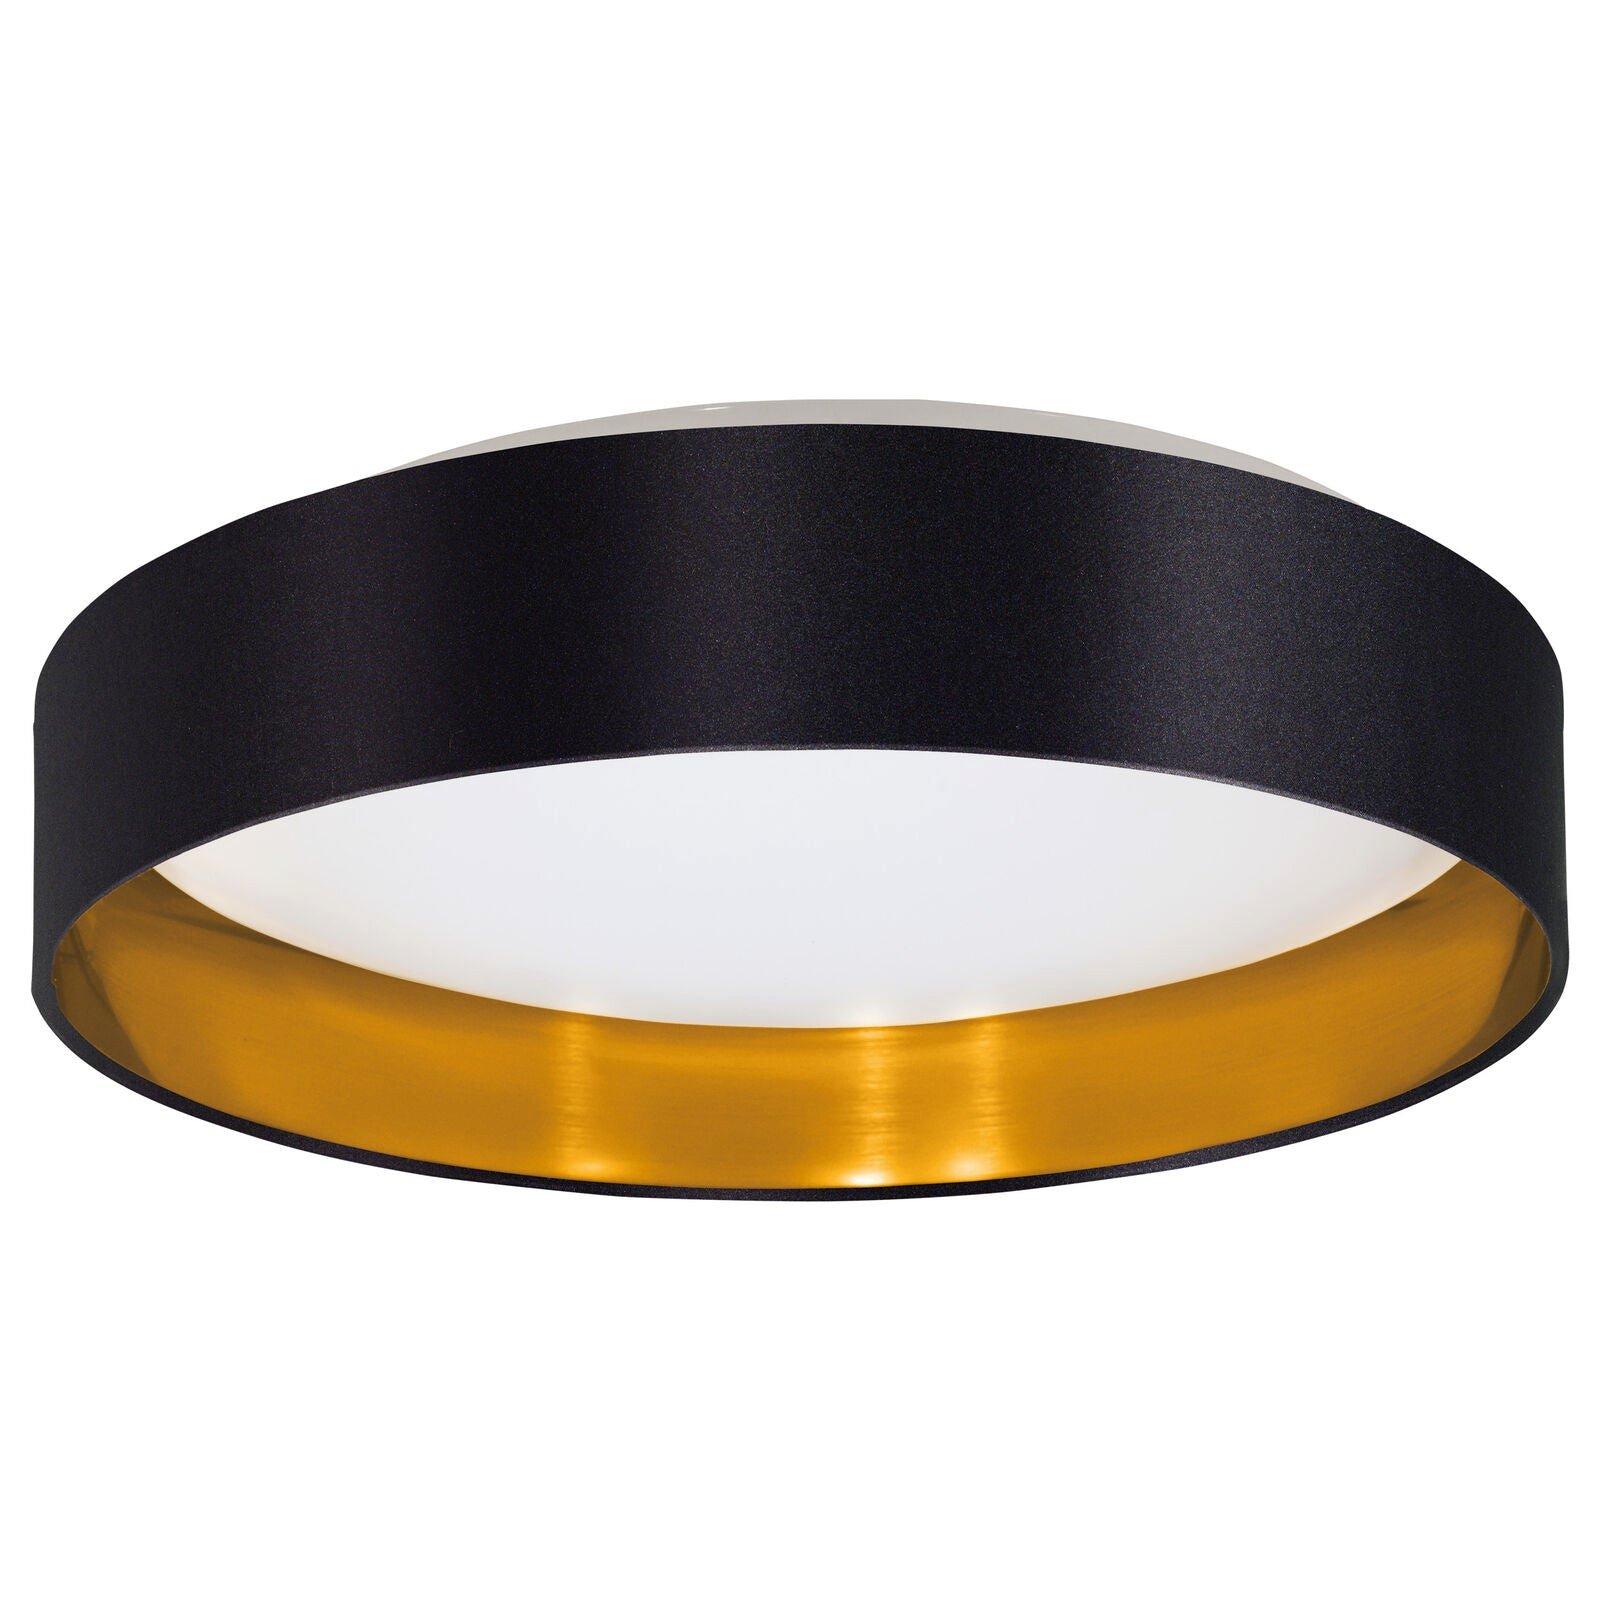 Flush Ceiling Light Colour White Shade Black Gold Fabric Bulb LED 24W Included